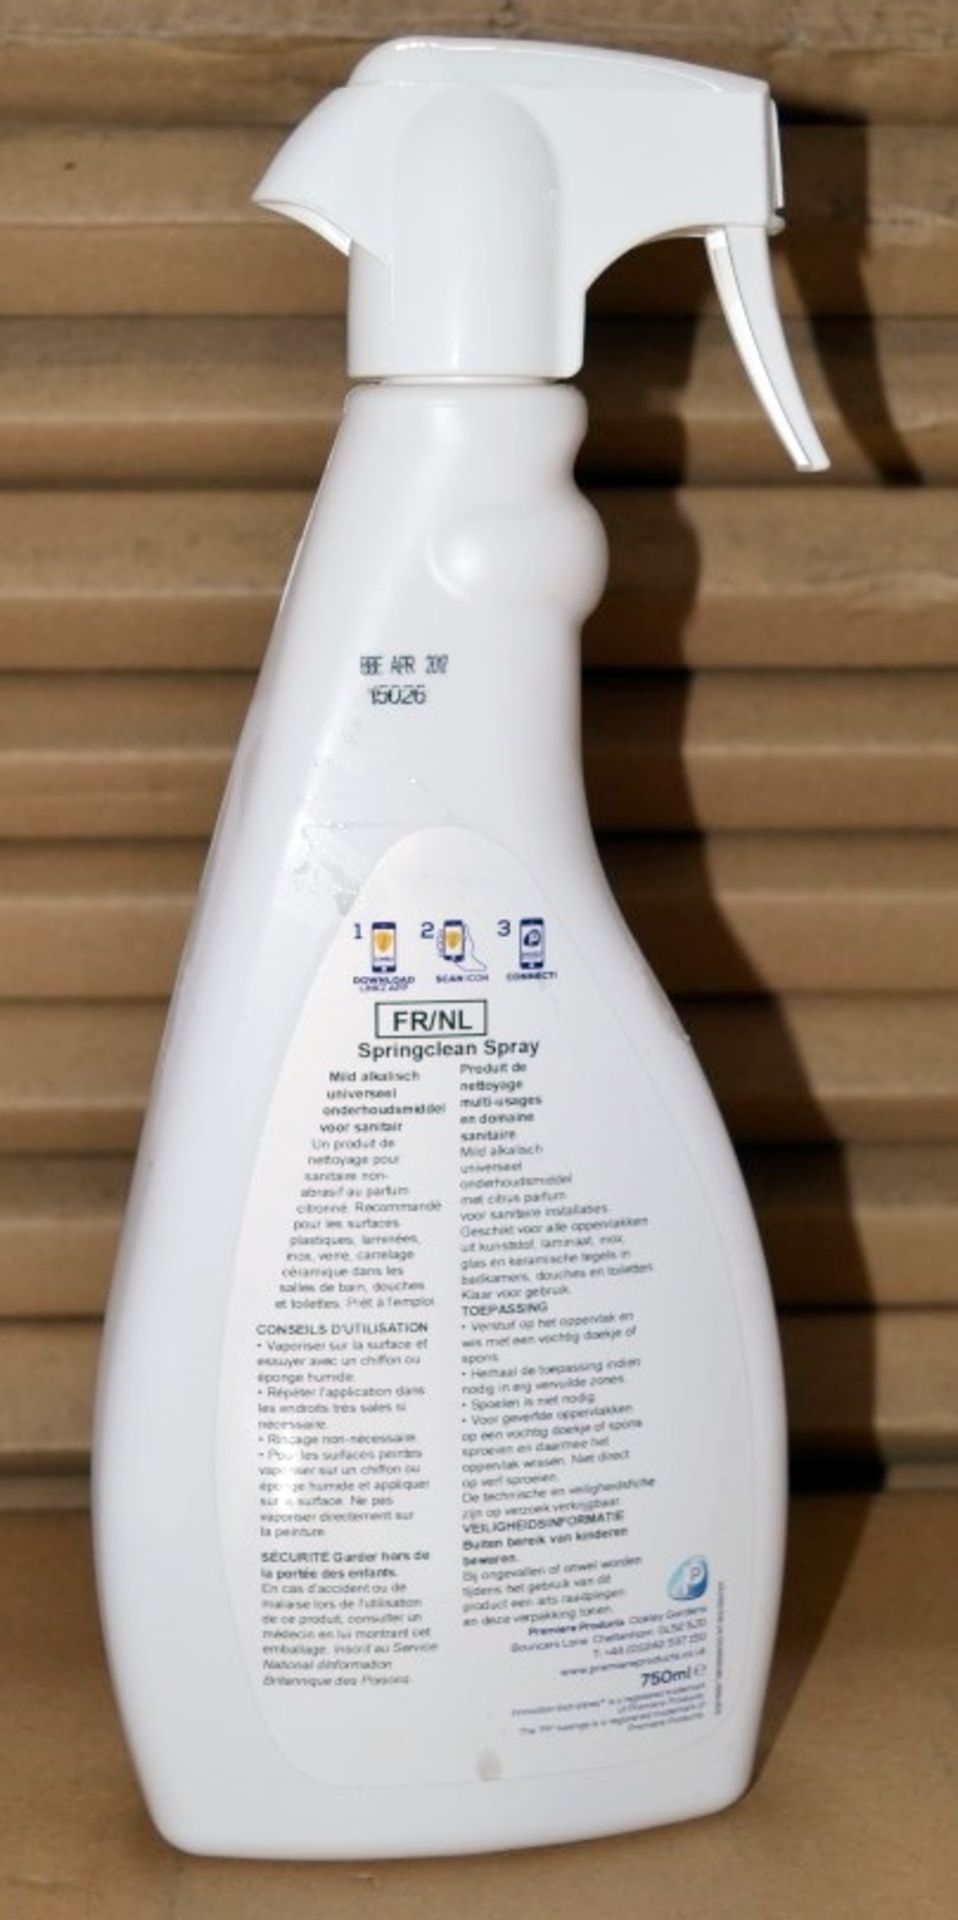 6 x 750ml Bottles Of Premiere "Springclean Spray" Commercial Washroom Cleaner - Orange Fragrance - - Image 5 of 7